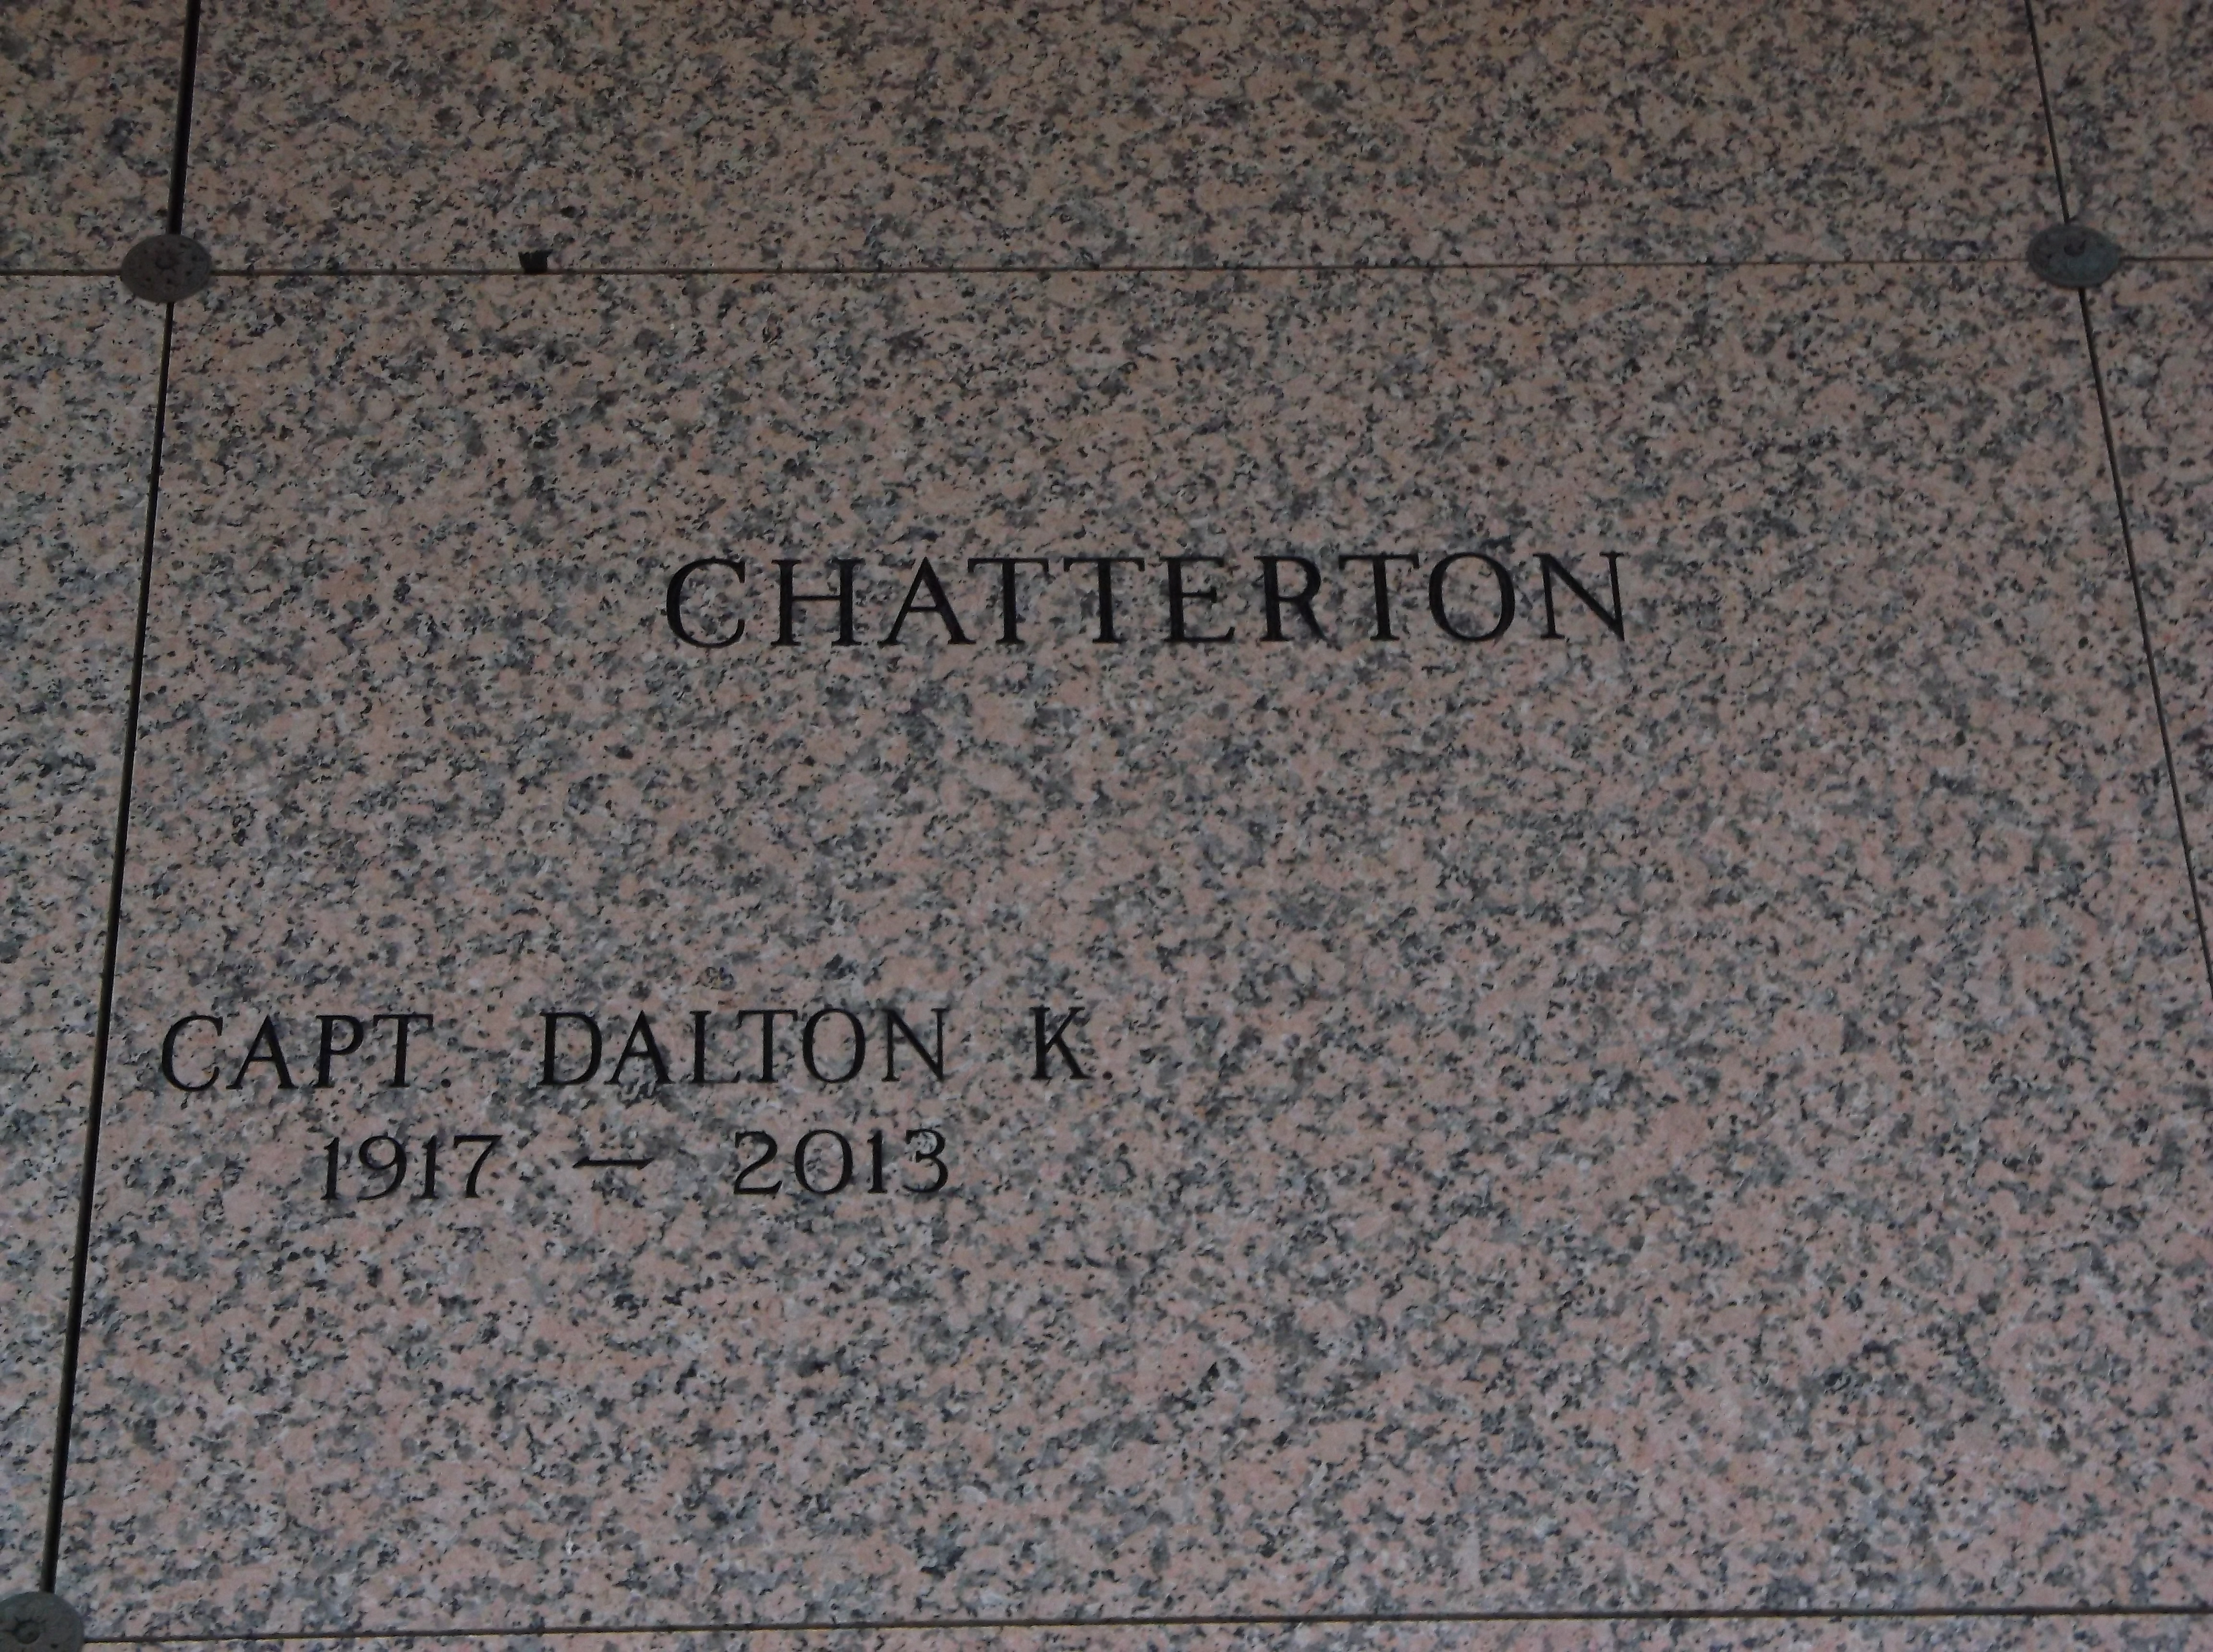 Capt Dalton K Chatterton